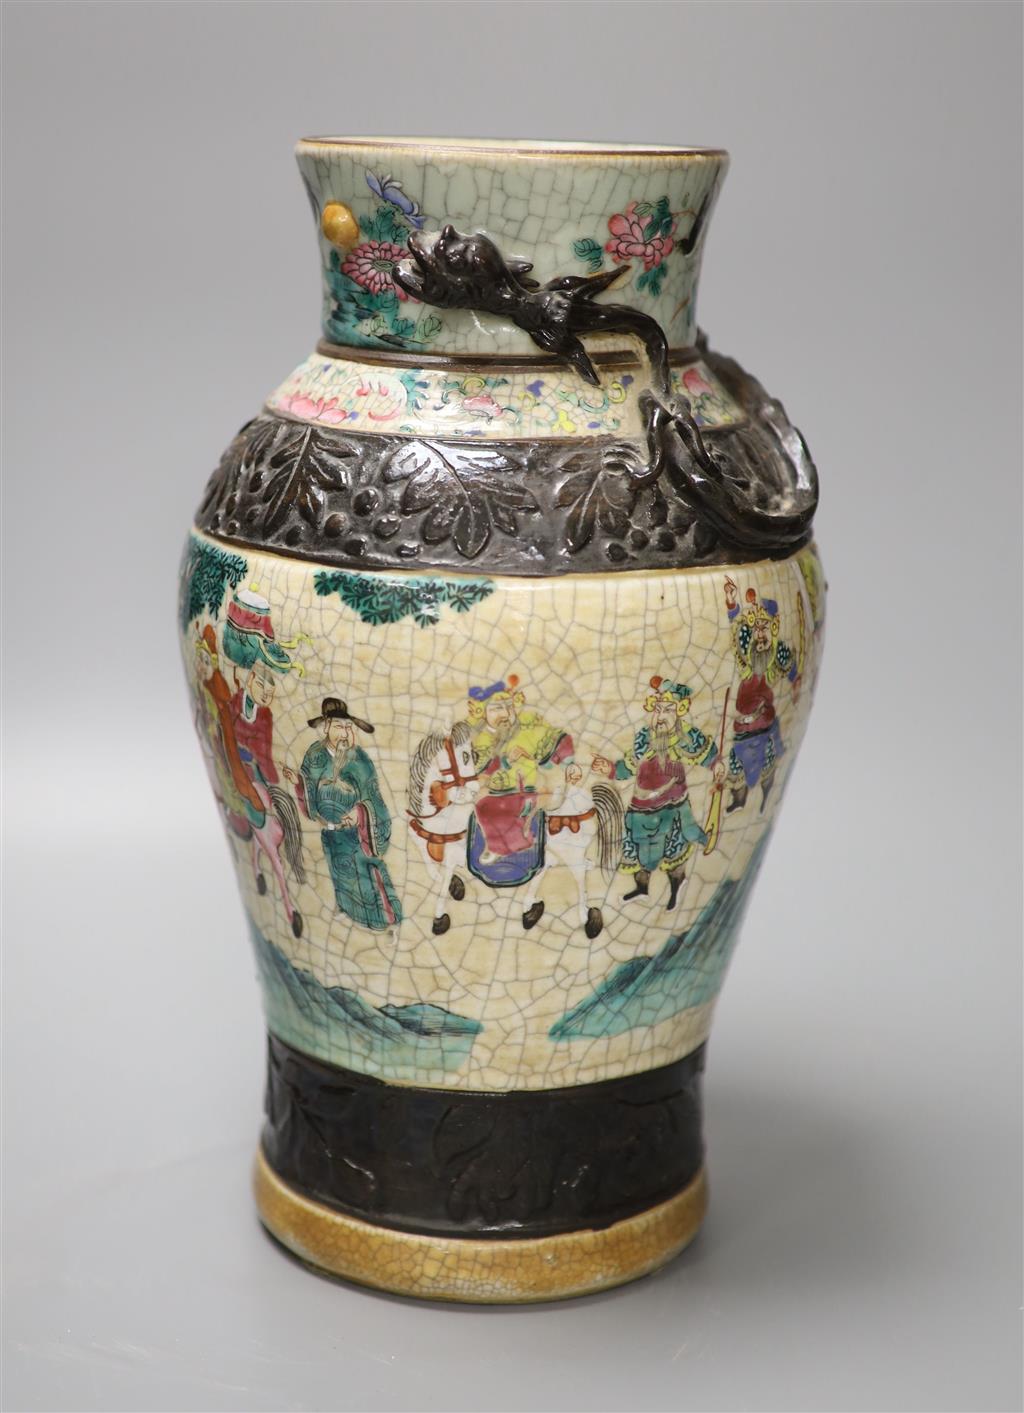 A 19th century Chinese crackleglaze famille rose vase, 31.5cm